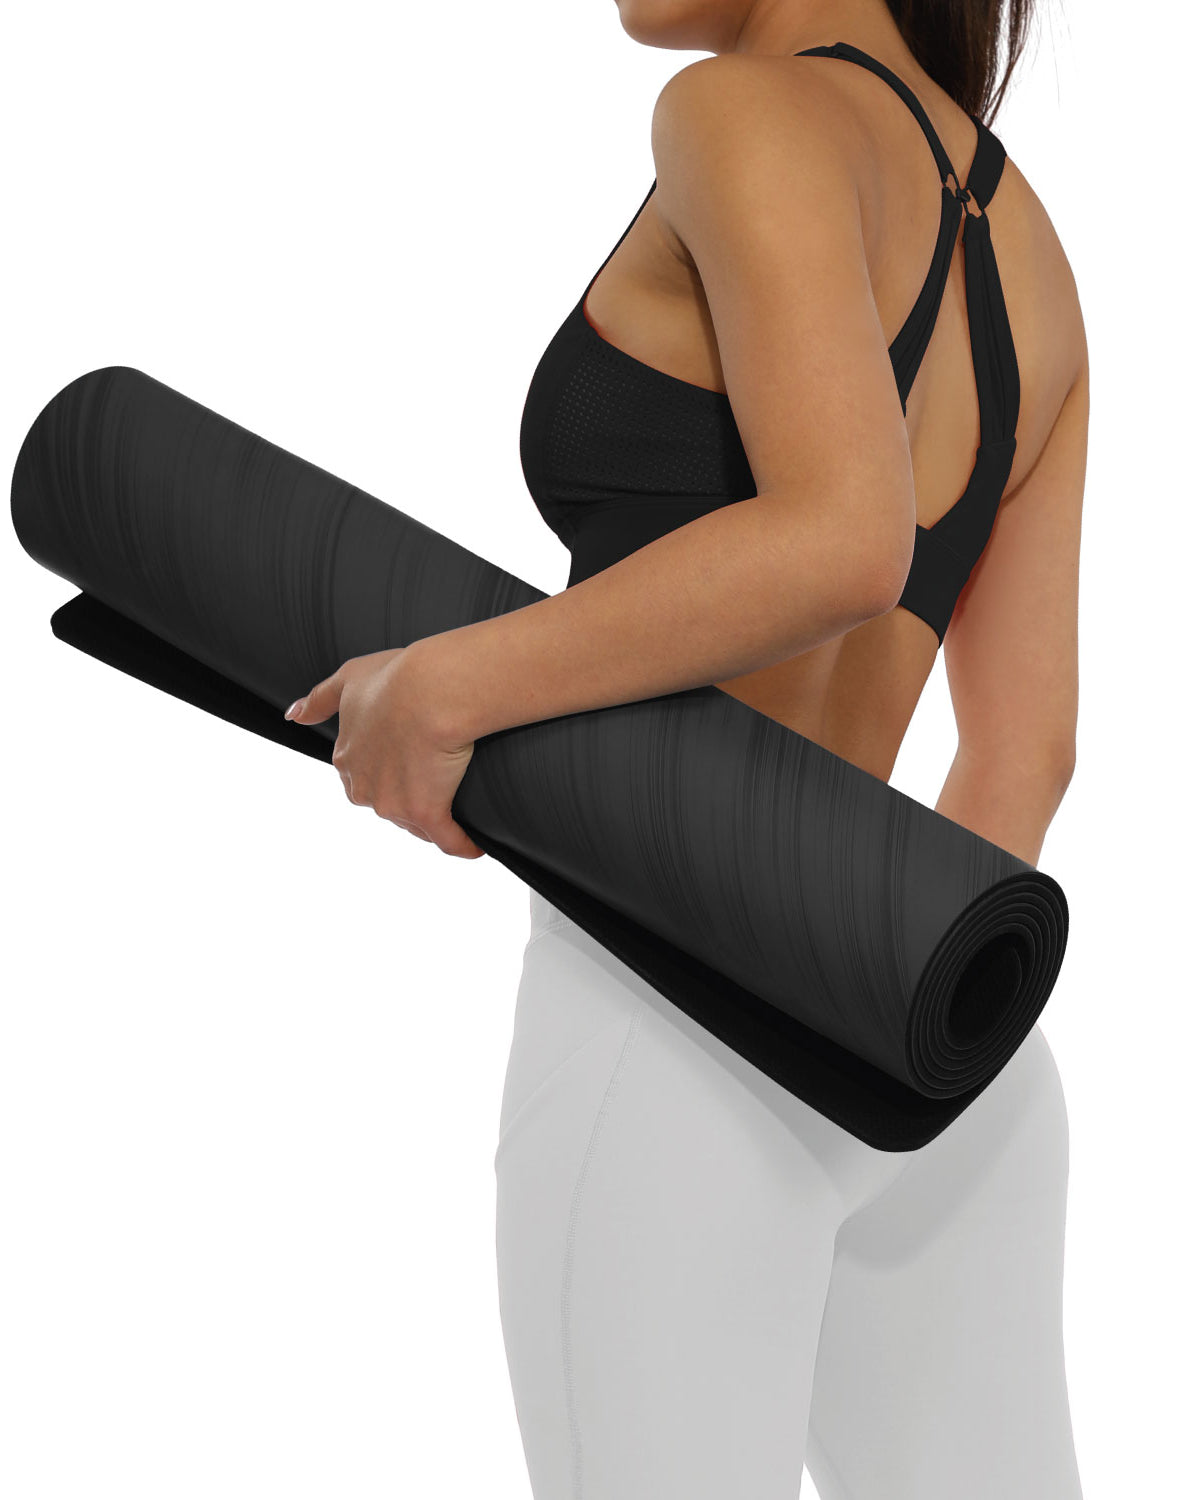 Eco Friendly PU Yoga Mat Texture Black 5mm - ododos